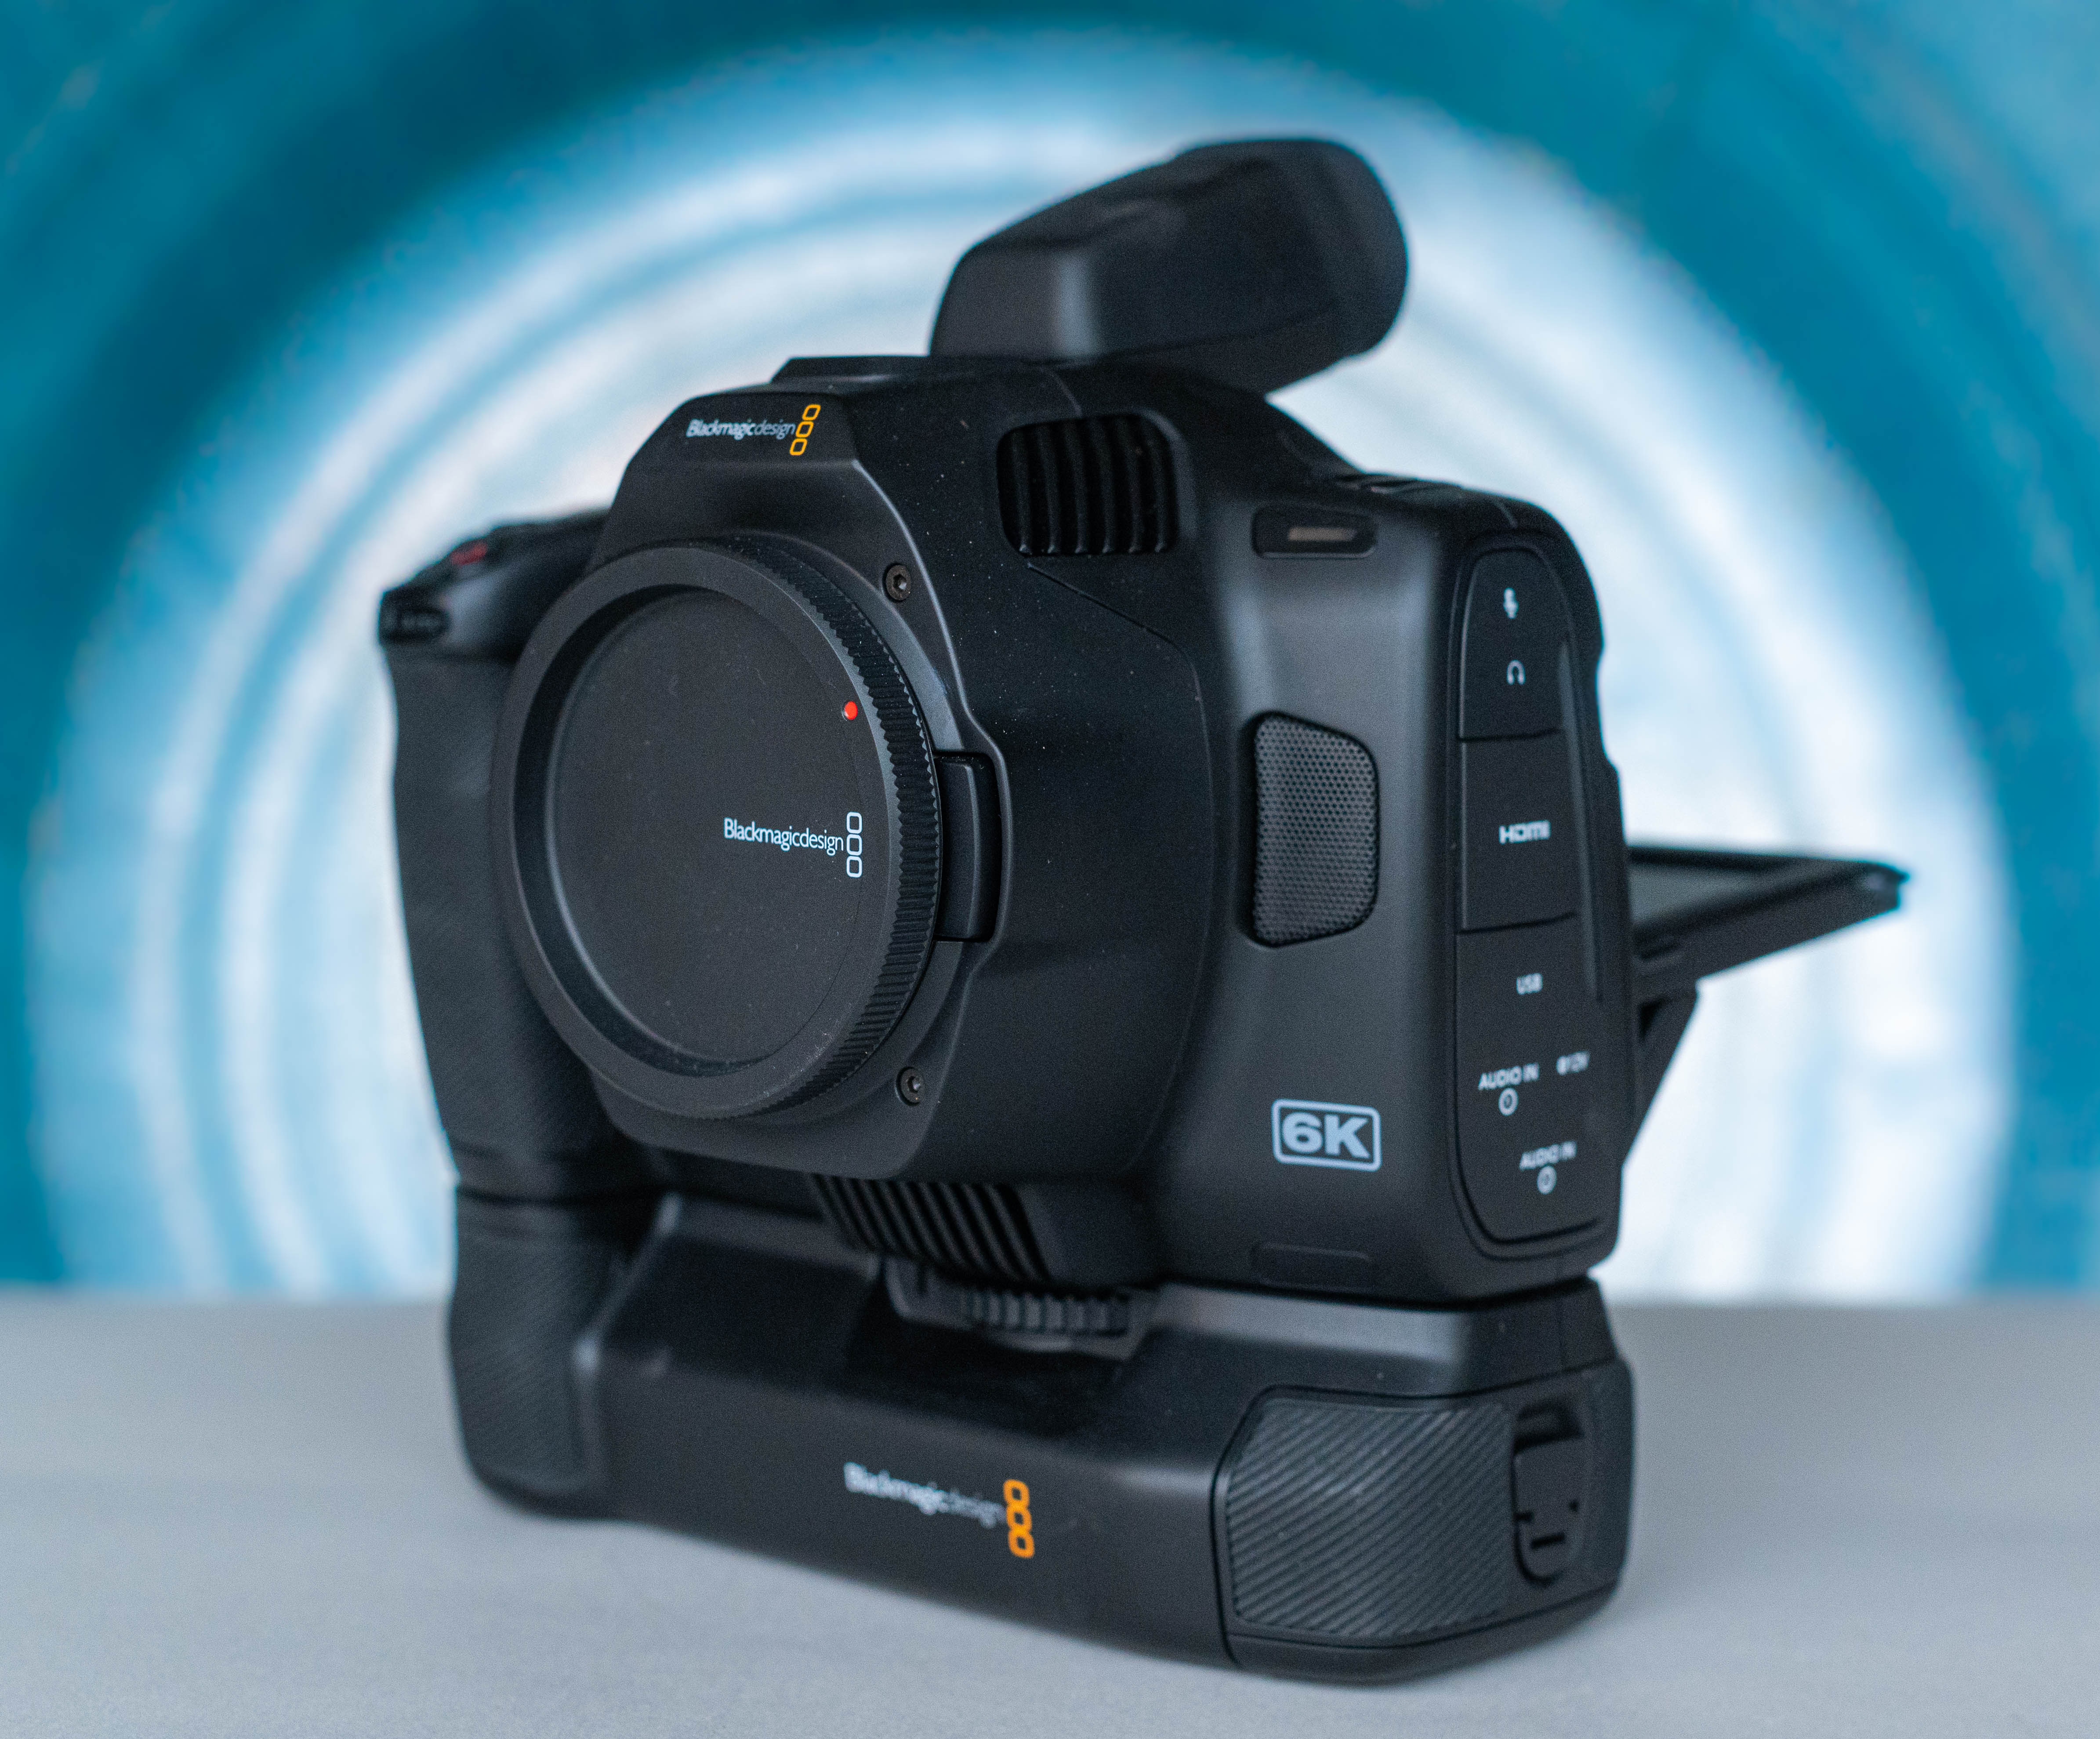 Reviewing The New Blackmagic Pocket Cinema Camera 6k Pro Laptrinhx News